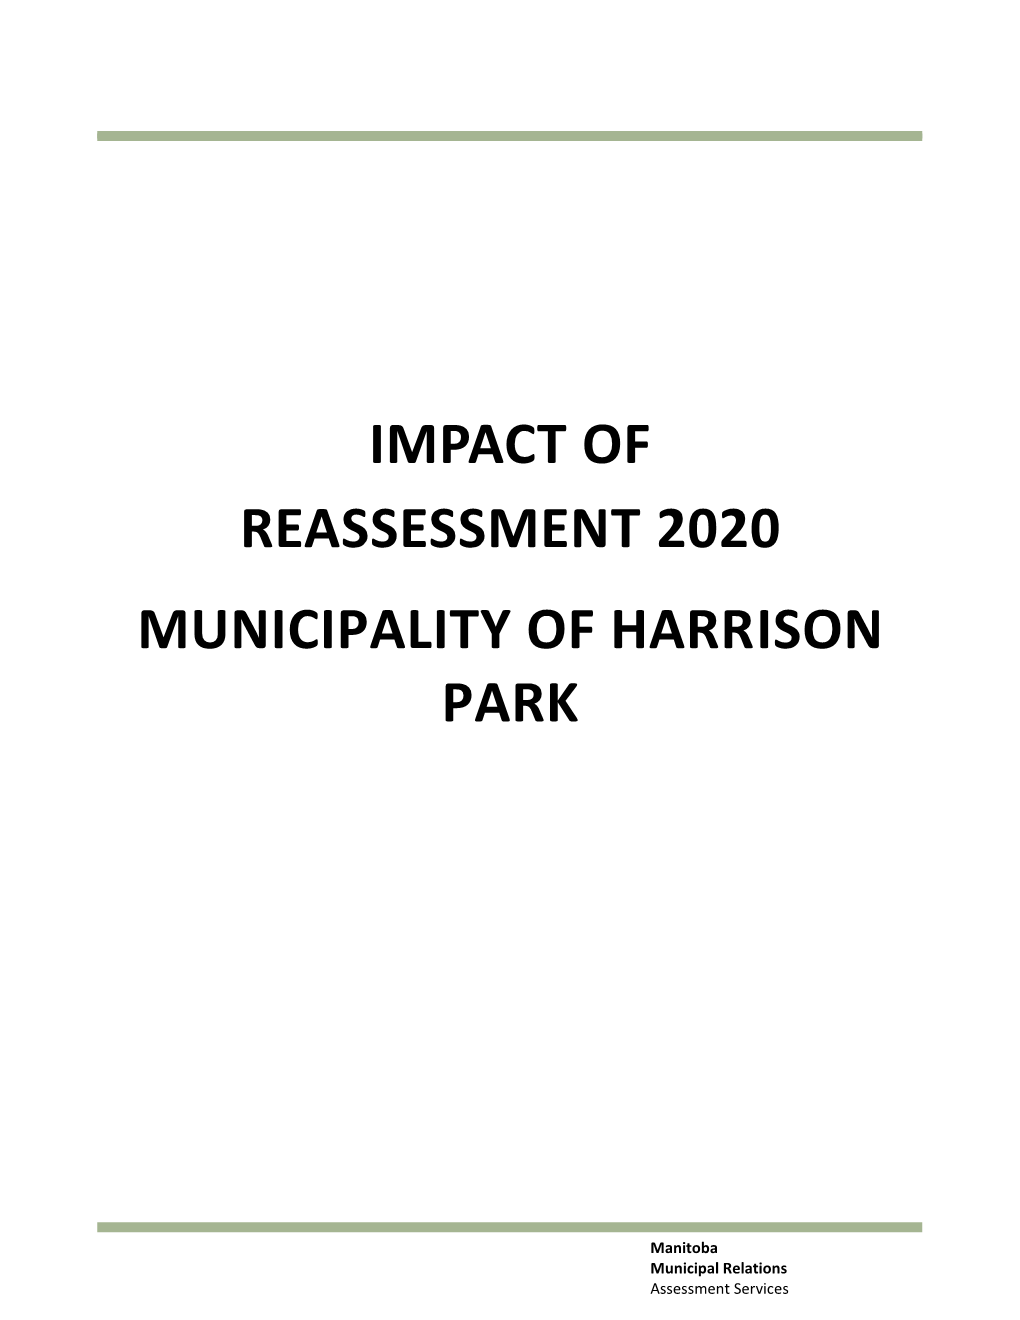 Impact of Reassessment 2020 Municipality of Harrison Park